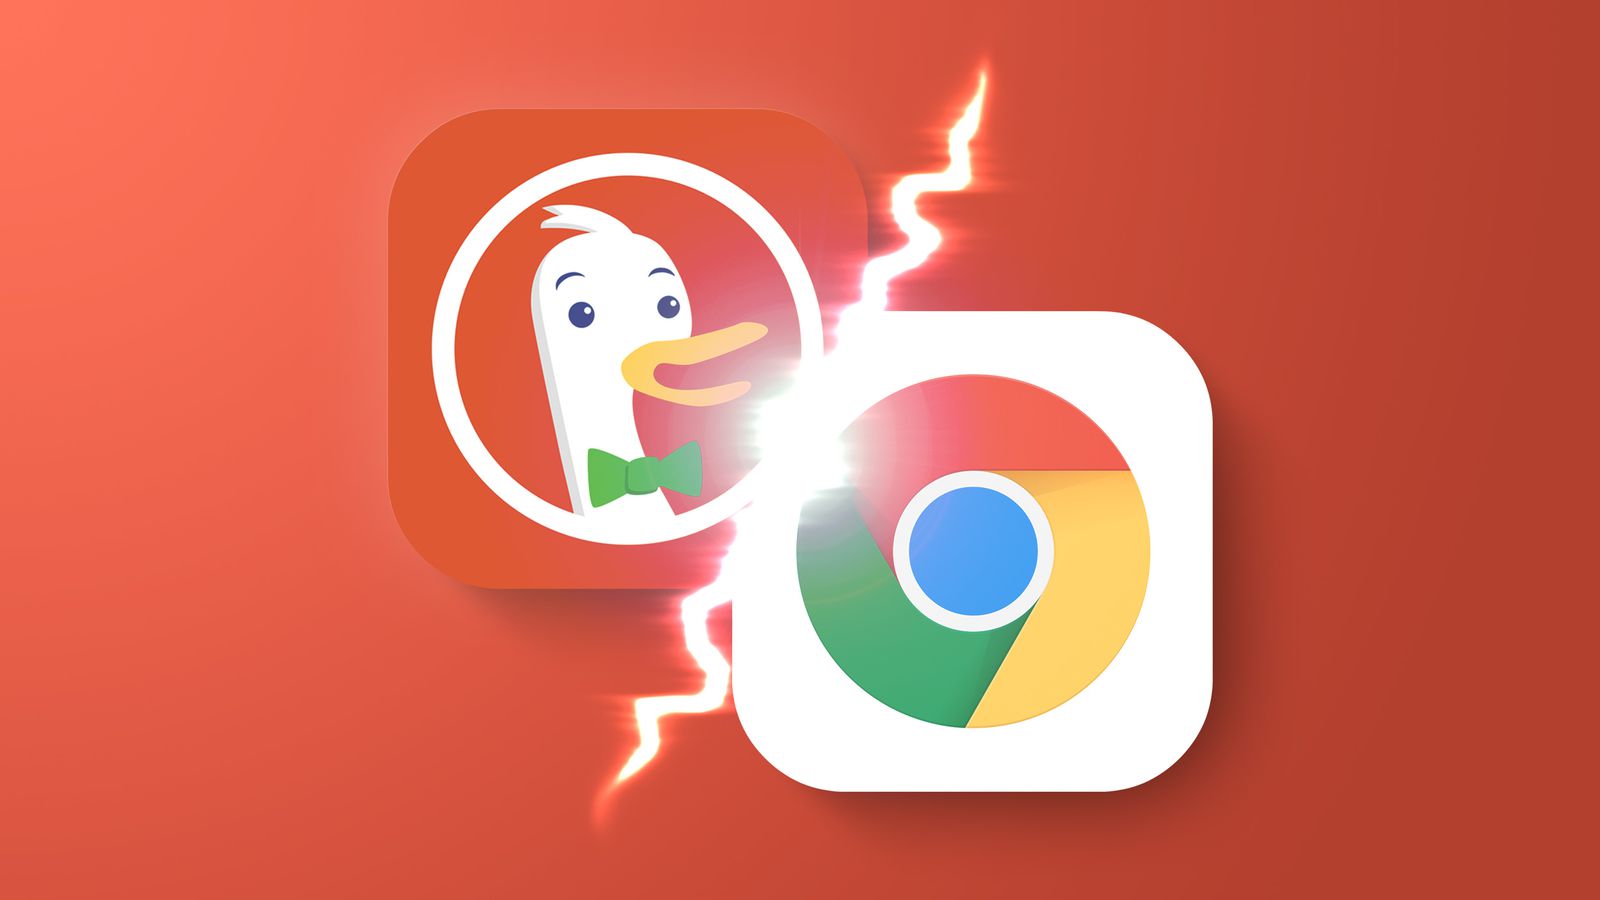 Duck Life: Battle Lite - Apps on Google Play